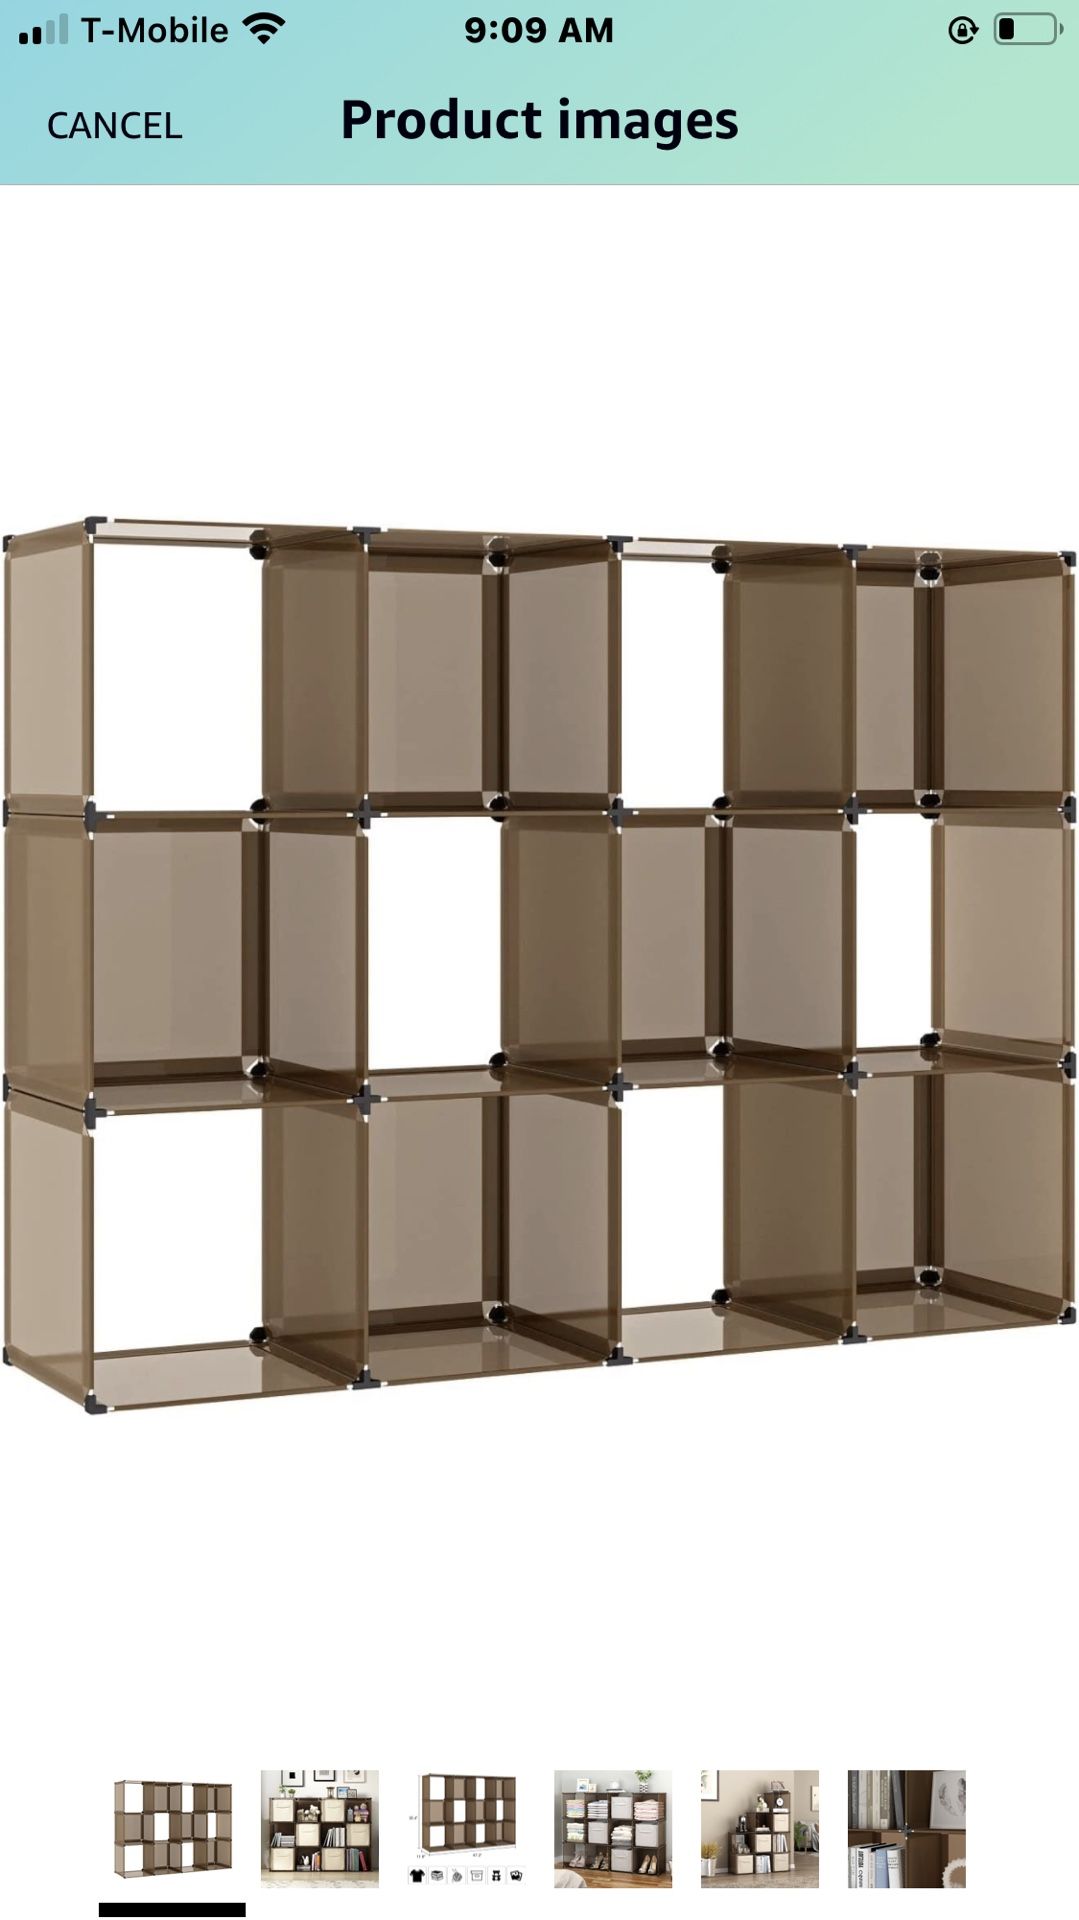 Portable Cube Storage Organizer Cube Storage Shelves Cube Shelf Room Organizer Clothes Storage Cubby Shelving Bookshelf Toy Organizer Cabinet, Brown, 